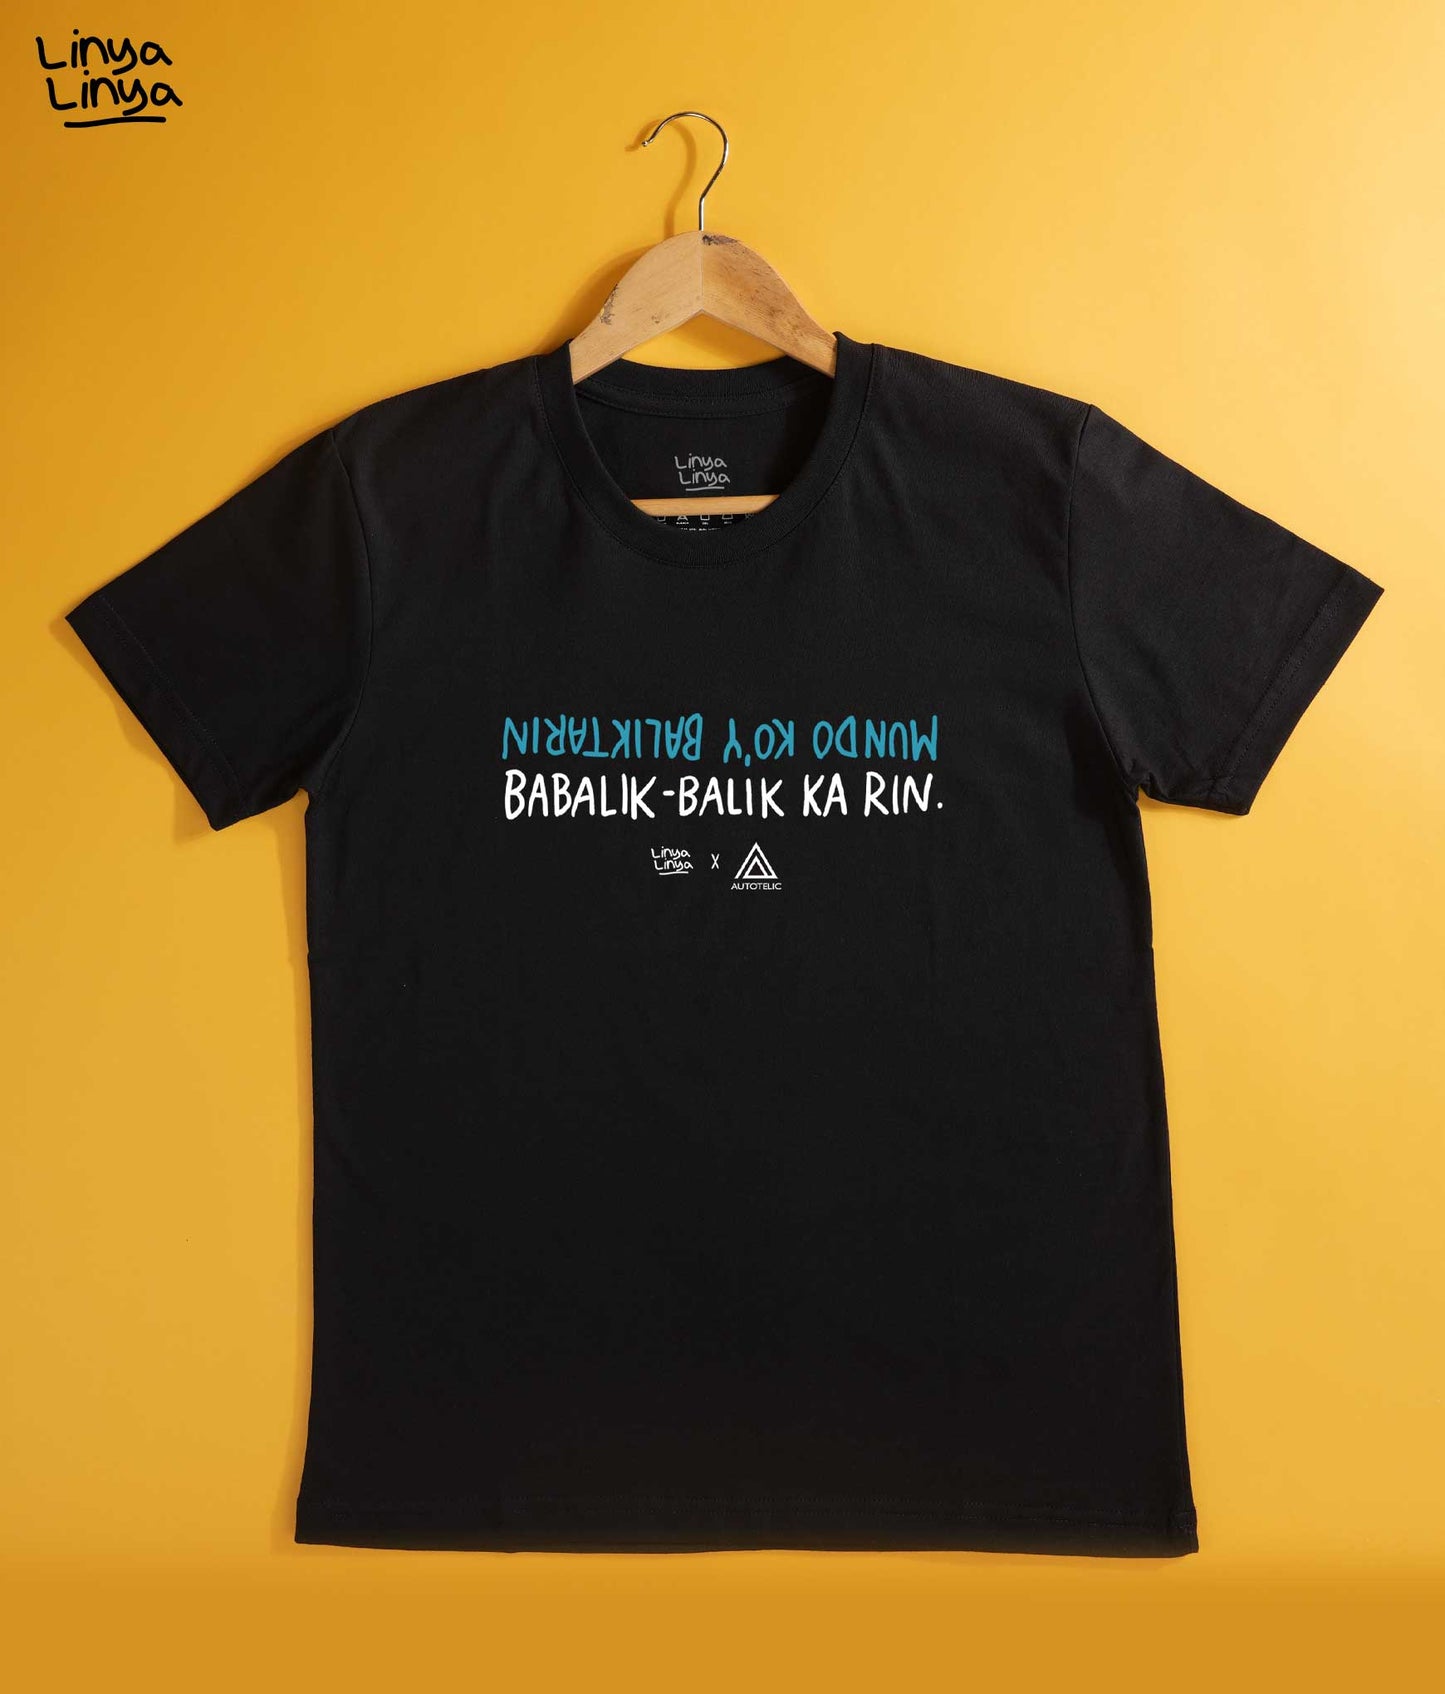 Linya-Linya x Autotelic Limited Edition - LANGUYIN Shirt: Mundo Ko’y Baliktarin, Babalik-Balik Ka Rin (Black)